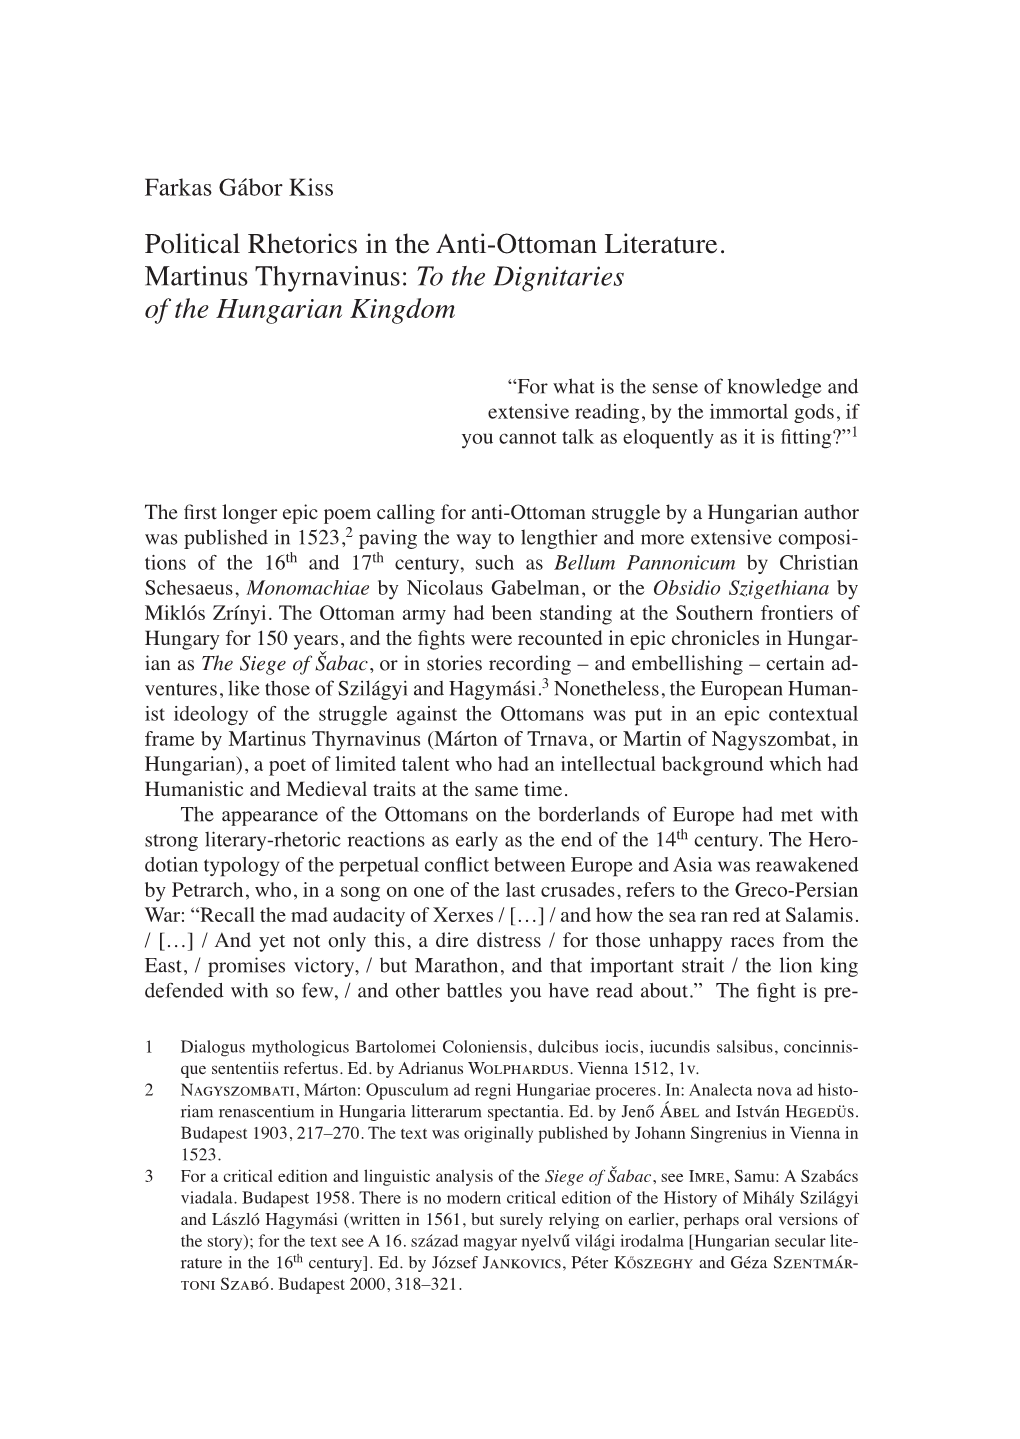 Political Rhetorics in the Anti-Ottoman Literature. Martinus Thyrnavinus: To